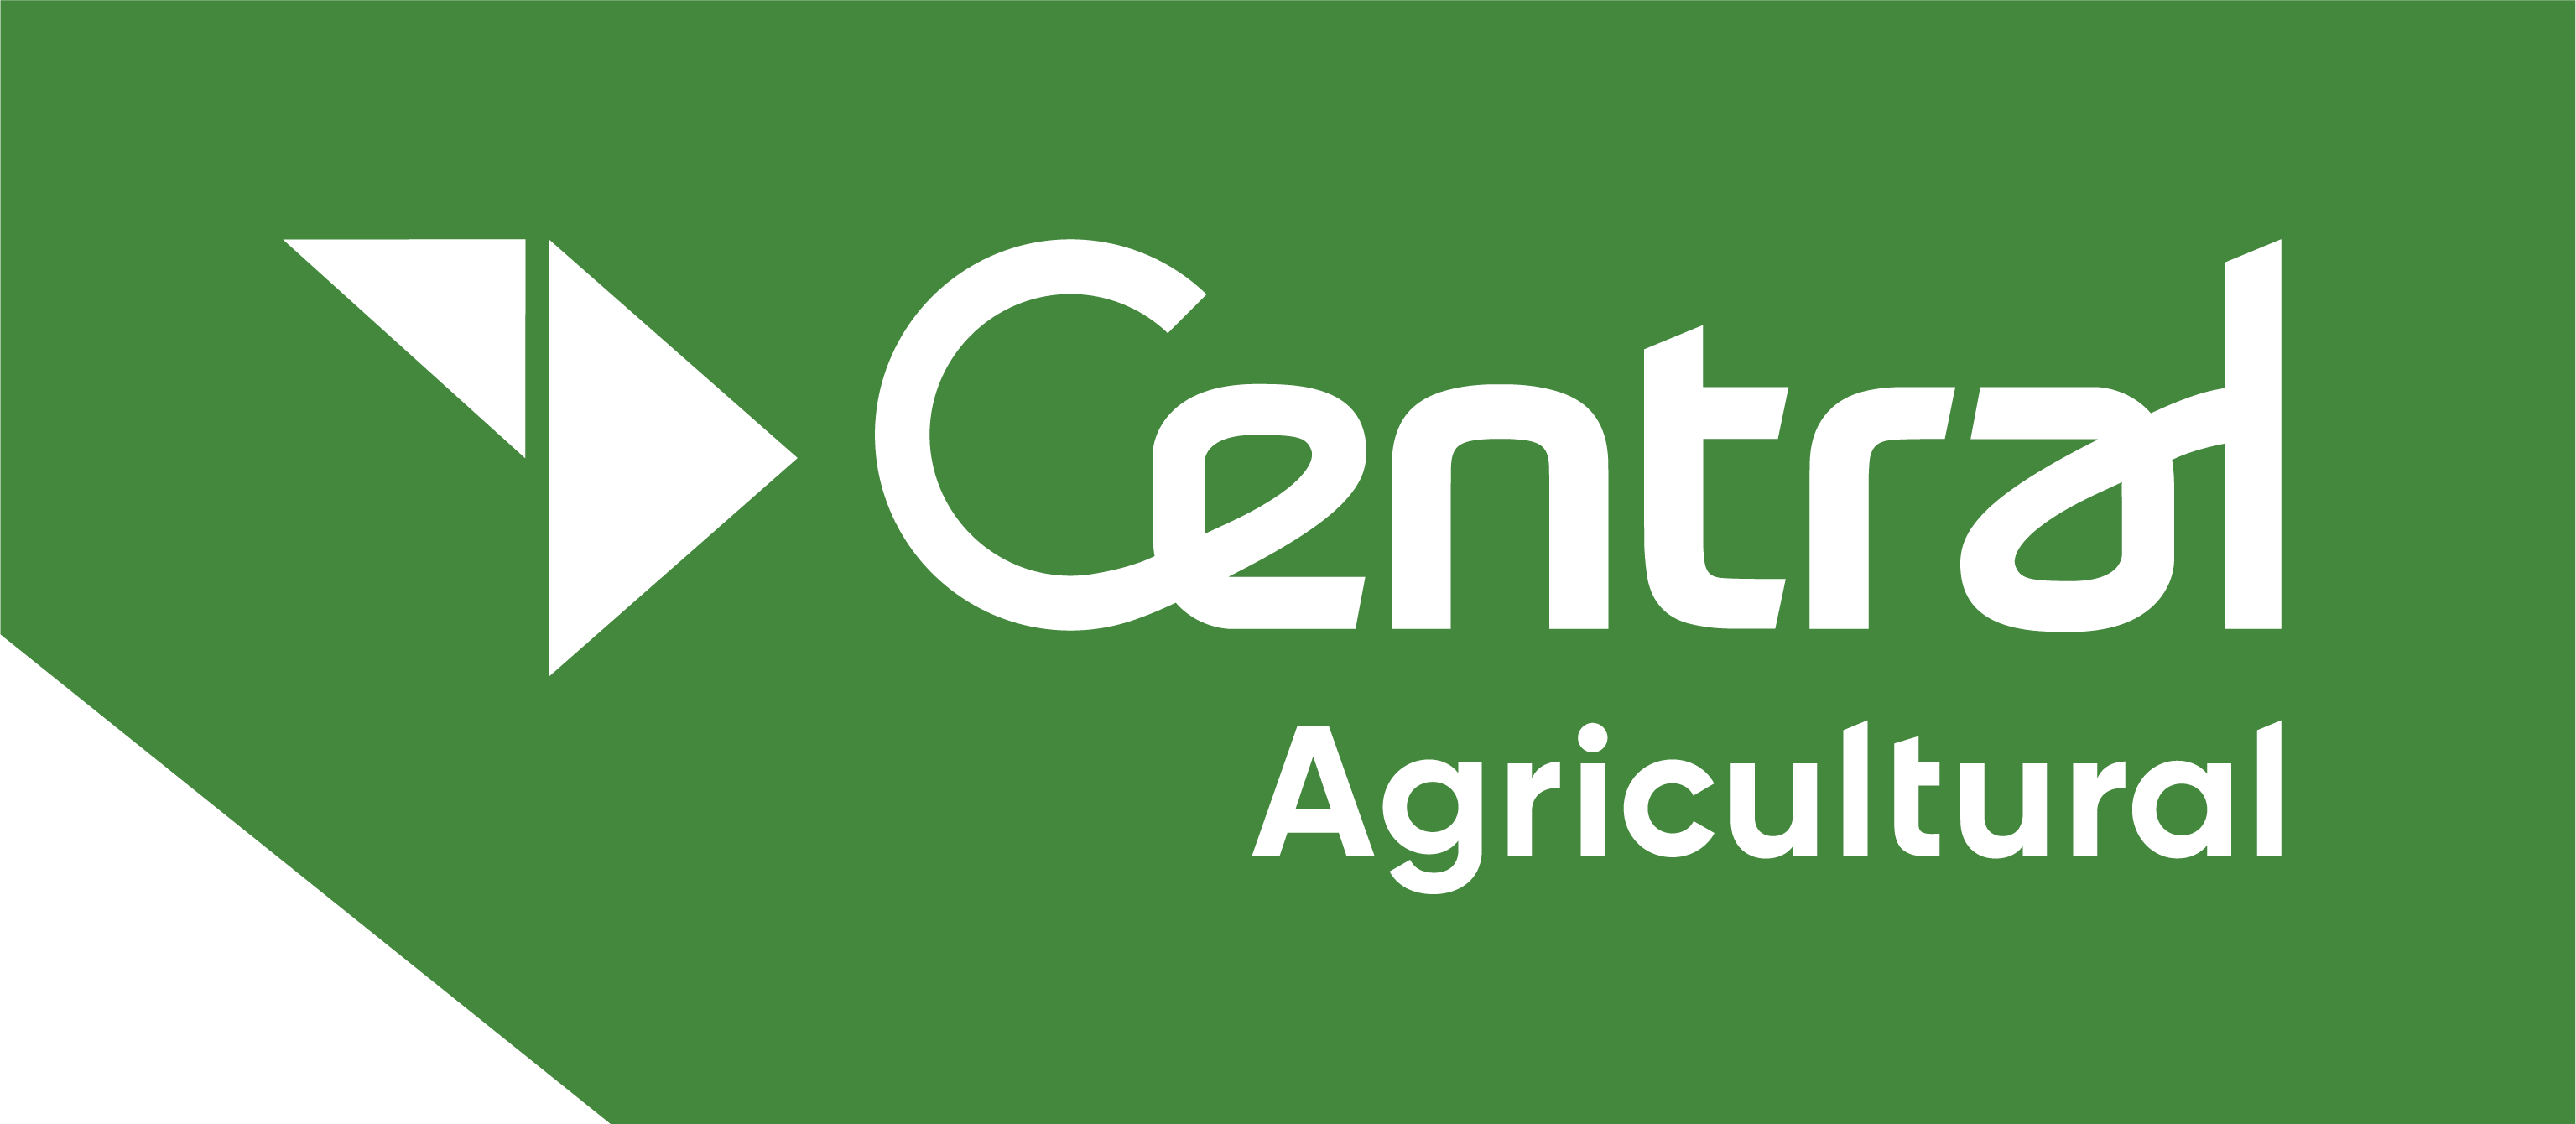 MASTER_Central_Agricultural_Logo_RGB